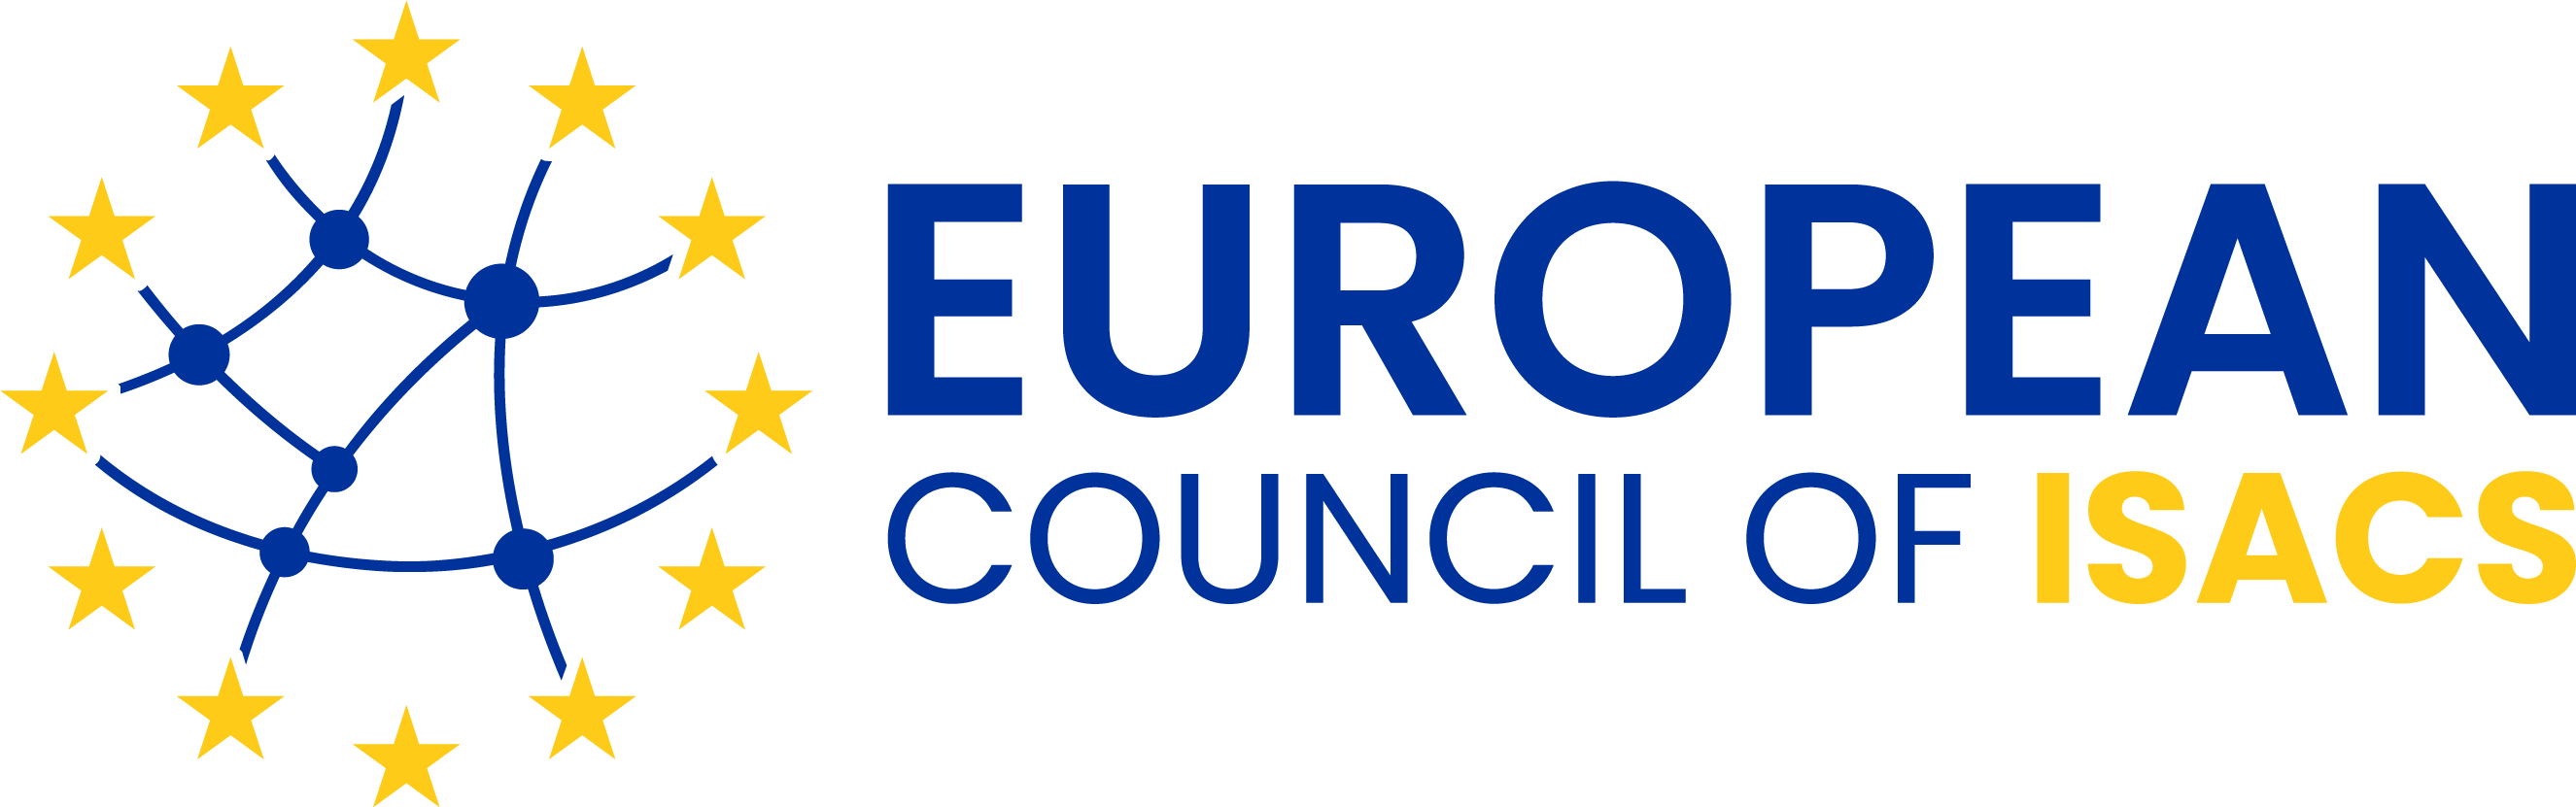 European Council of ISACs